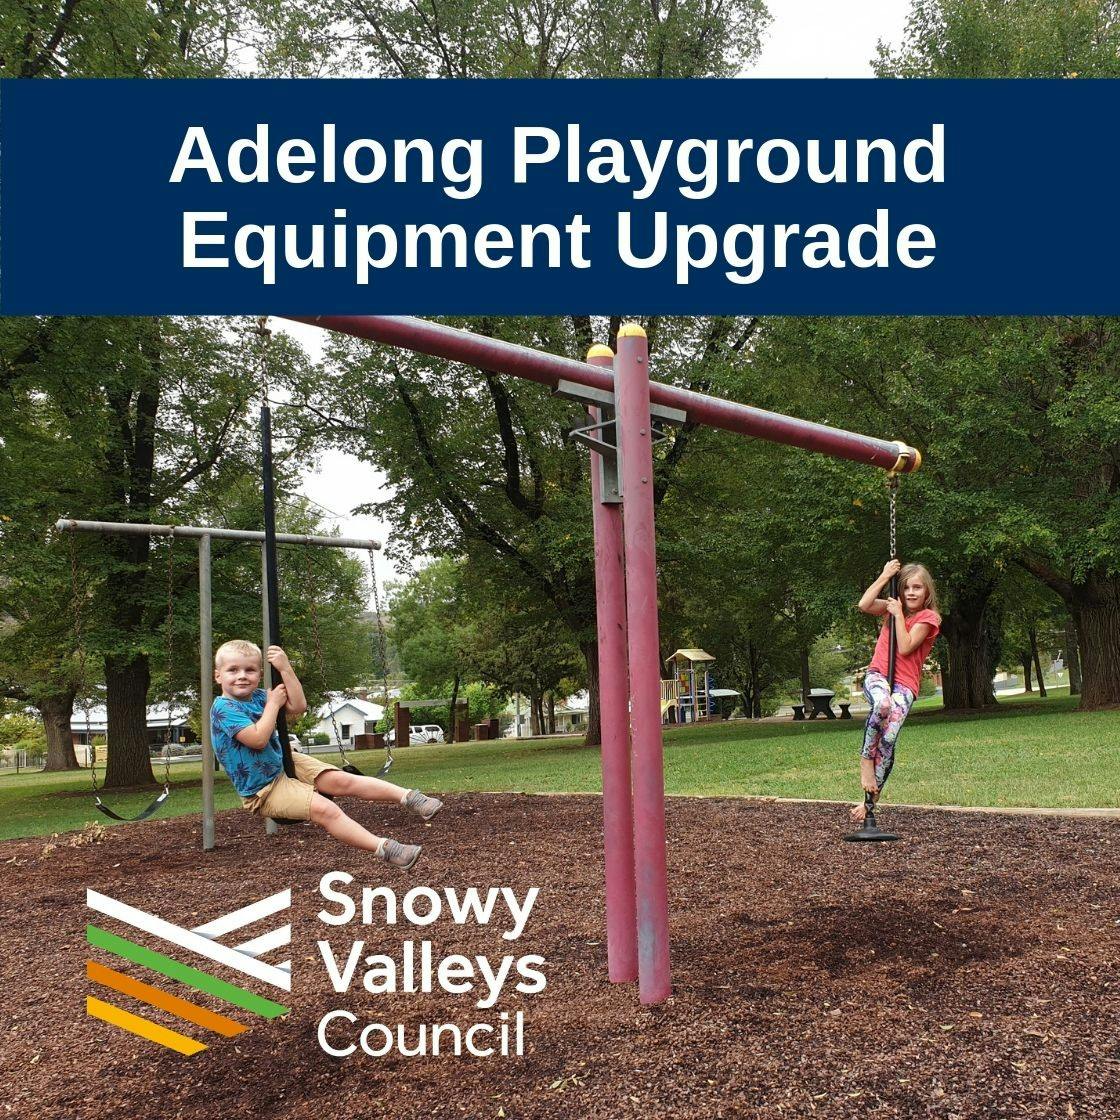 Adelong Playground Equipment Upgrade